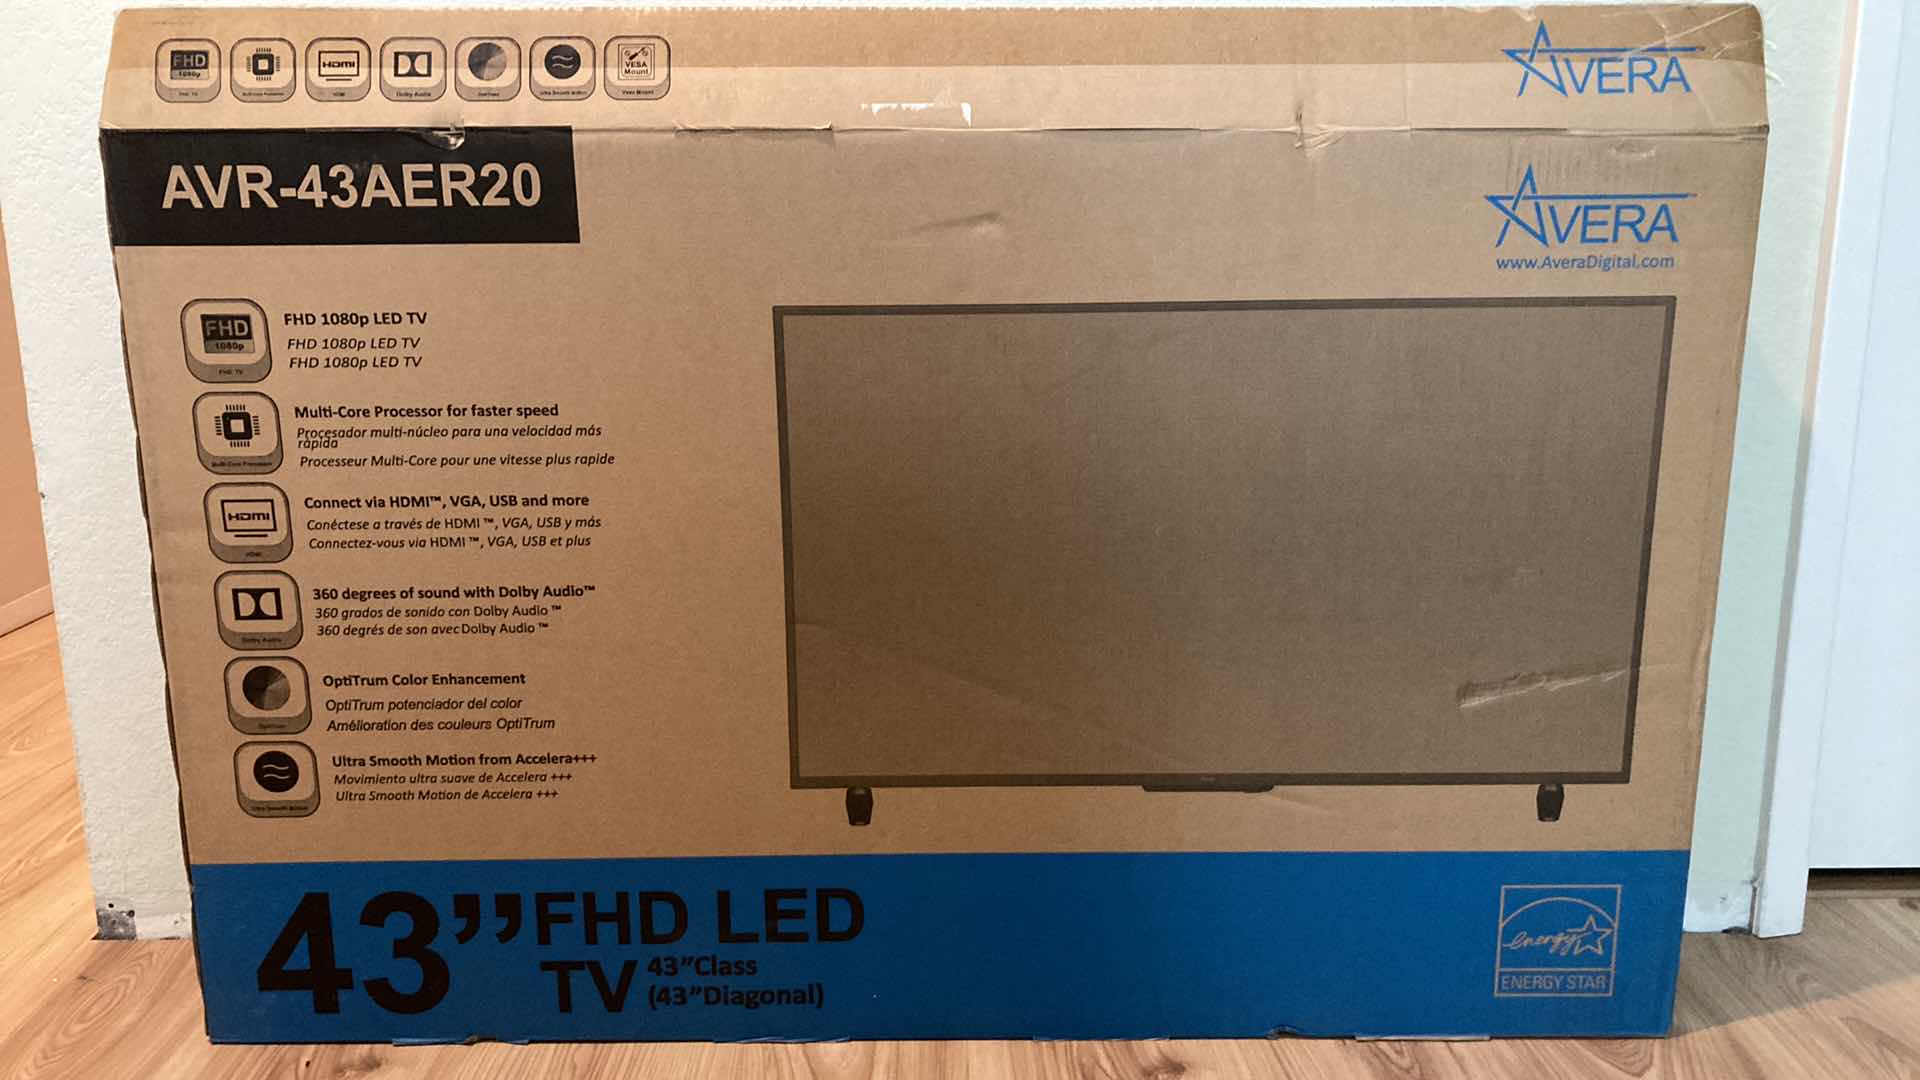 Photo 1 of NEW AVERA 43” FHD LED TV W REMOTE MODEL AVR-43AER20